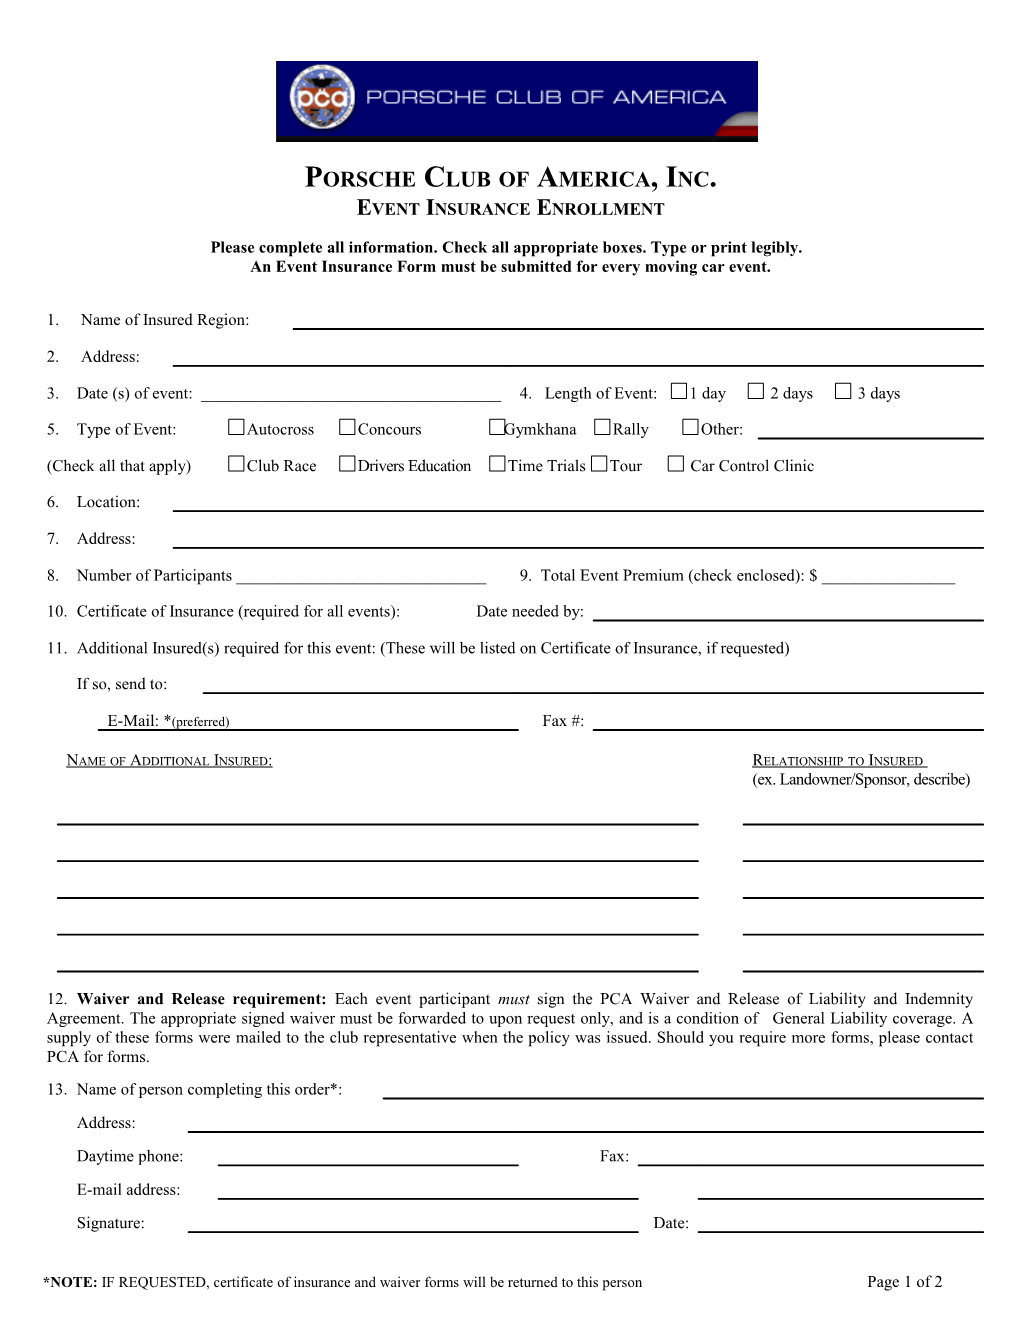 PCA Event Insurance Enrollment Form